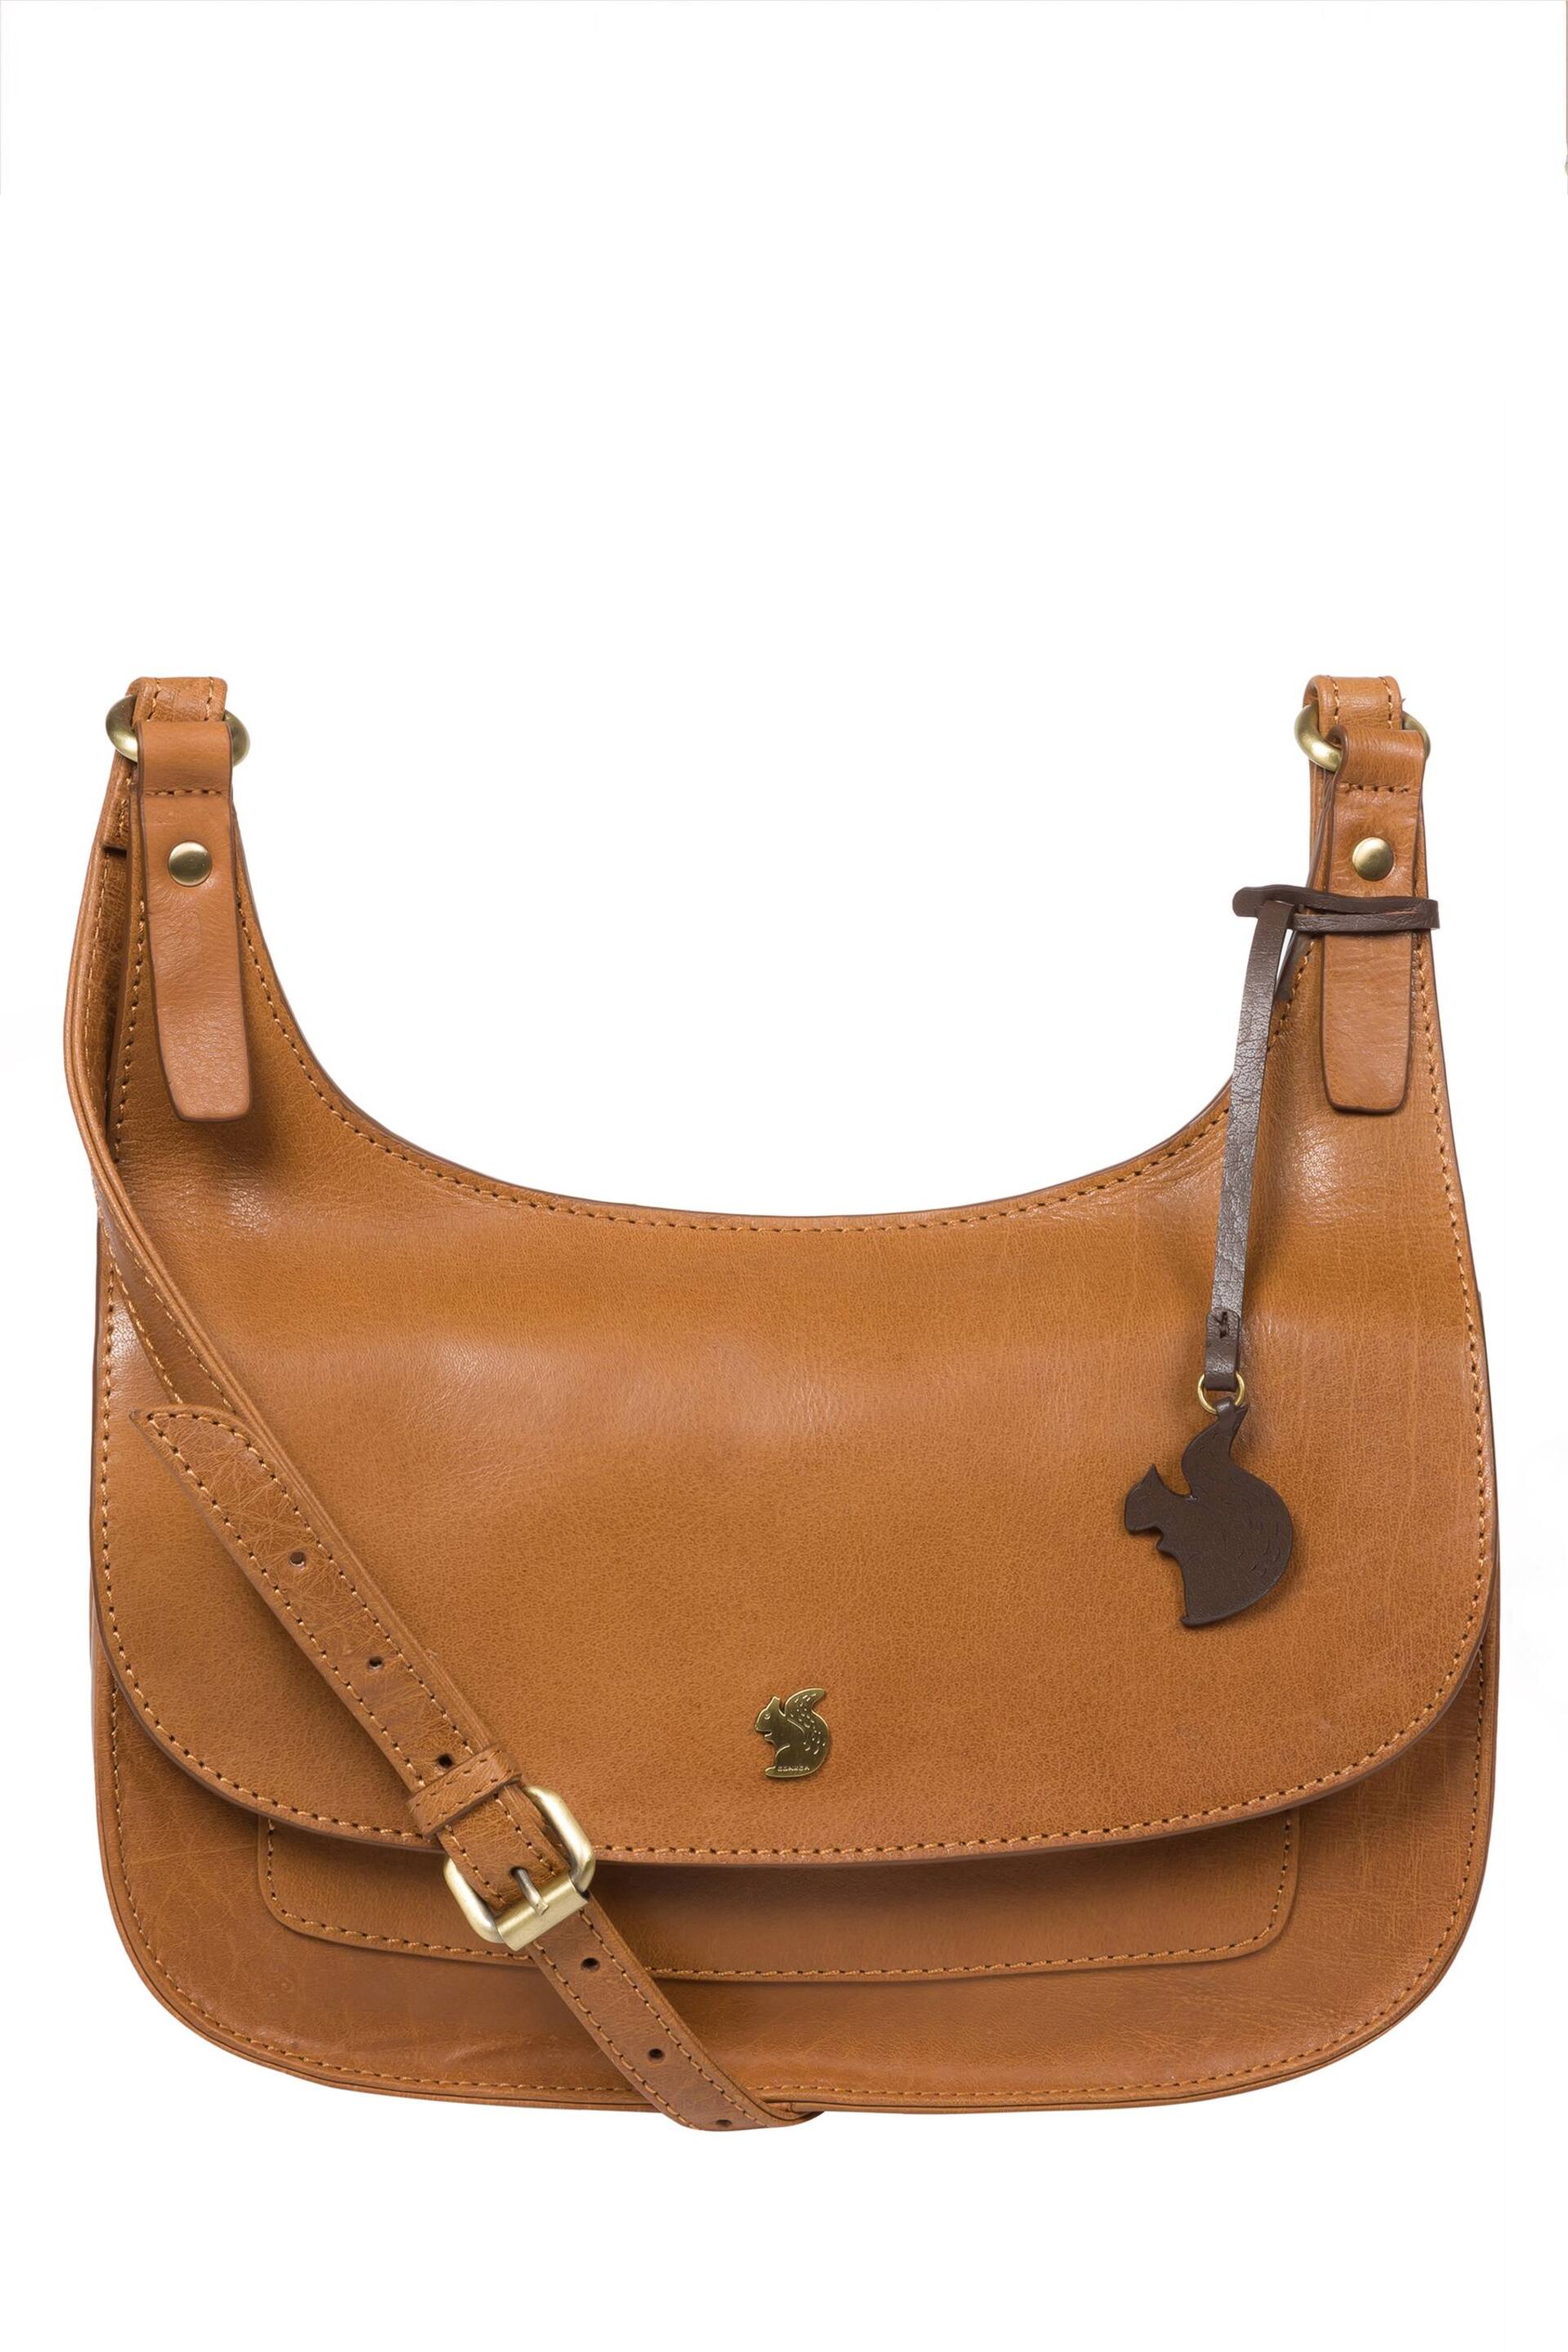 Conkca Ellipse Leather Cross-Body Bag - Image 1 of 6